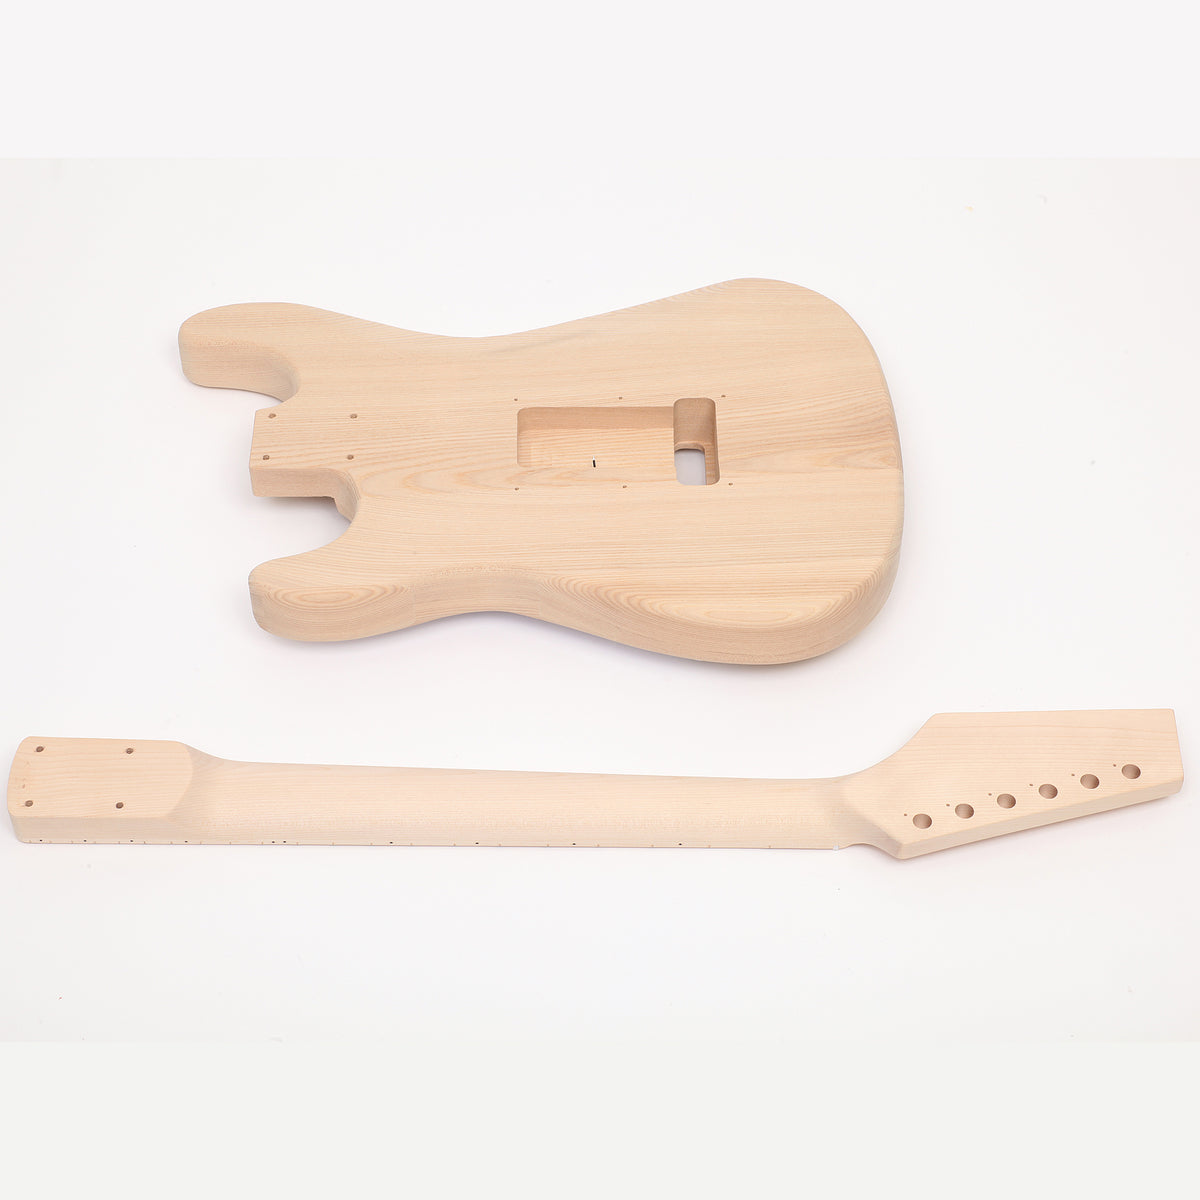 DIY Guitar & Bass Kits  Build Your Own Custom DIY Electric Guitar –  BlackBeard DIY Guitars